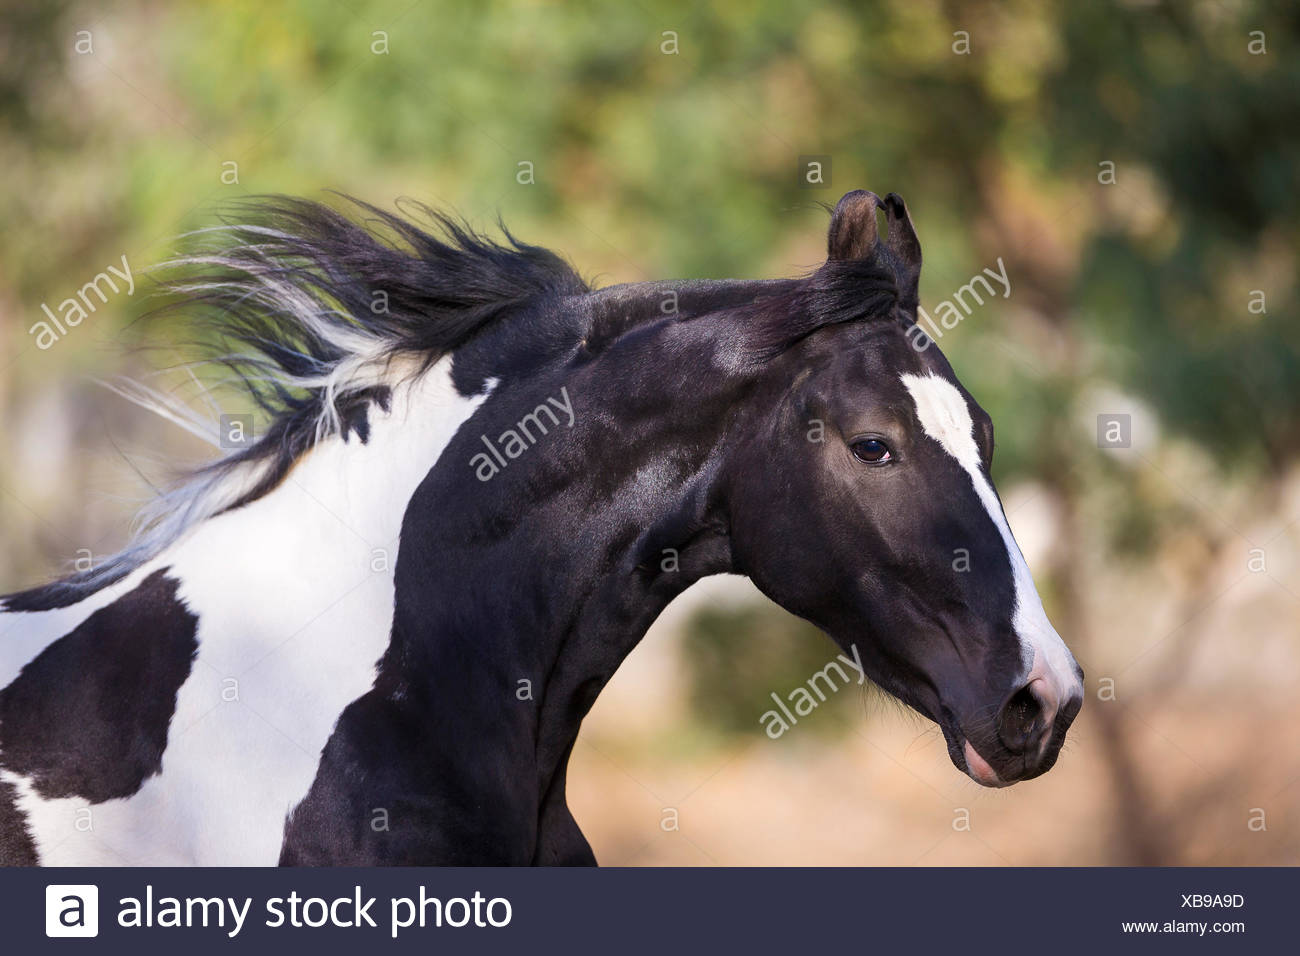 https://c8.alamy.com/comp/XB9A9D/marwari-horse-piebald-stallion-galloping-in-a-paddock-portrait-india-XB9A9D.jpg